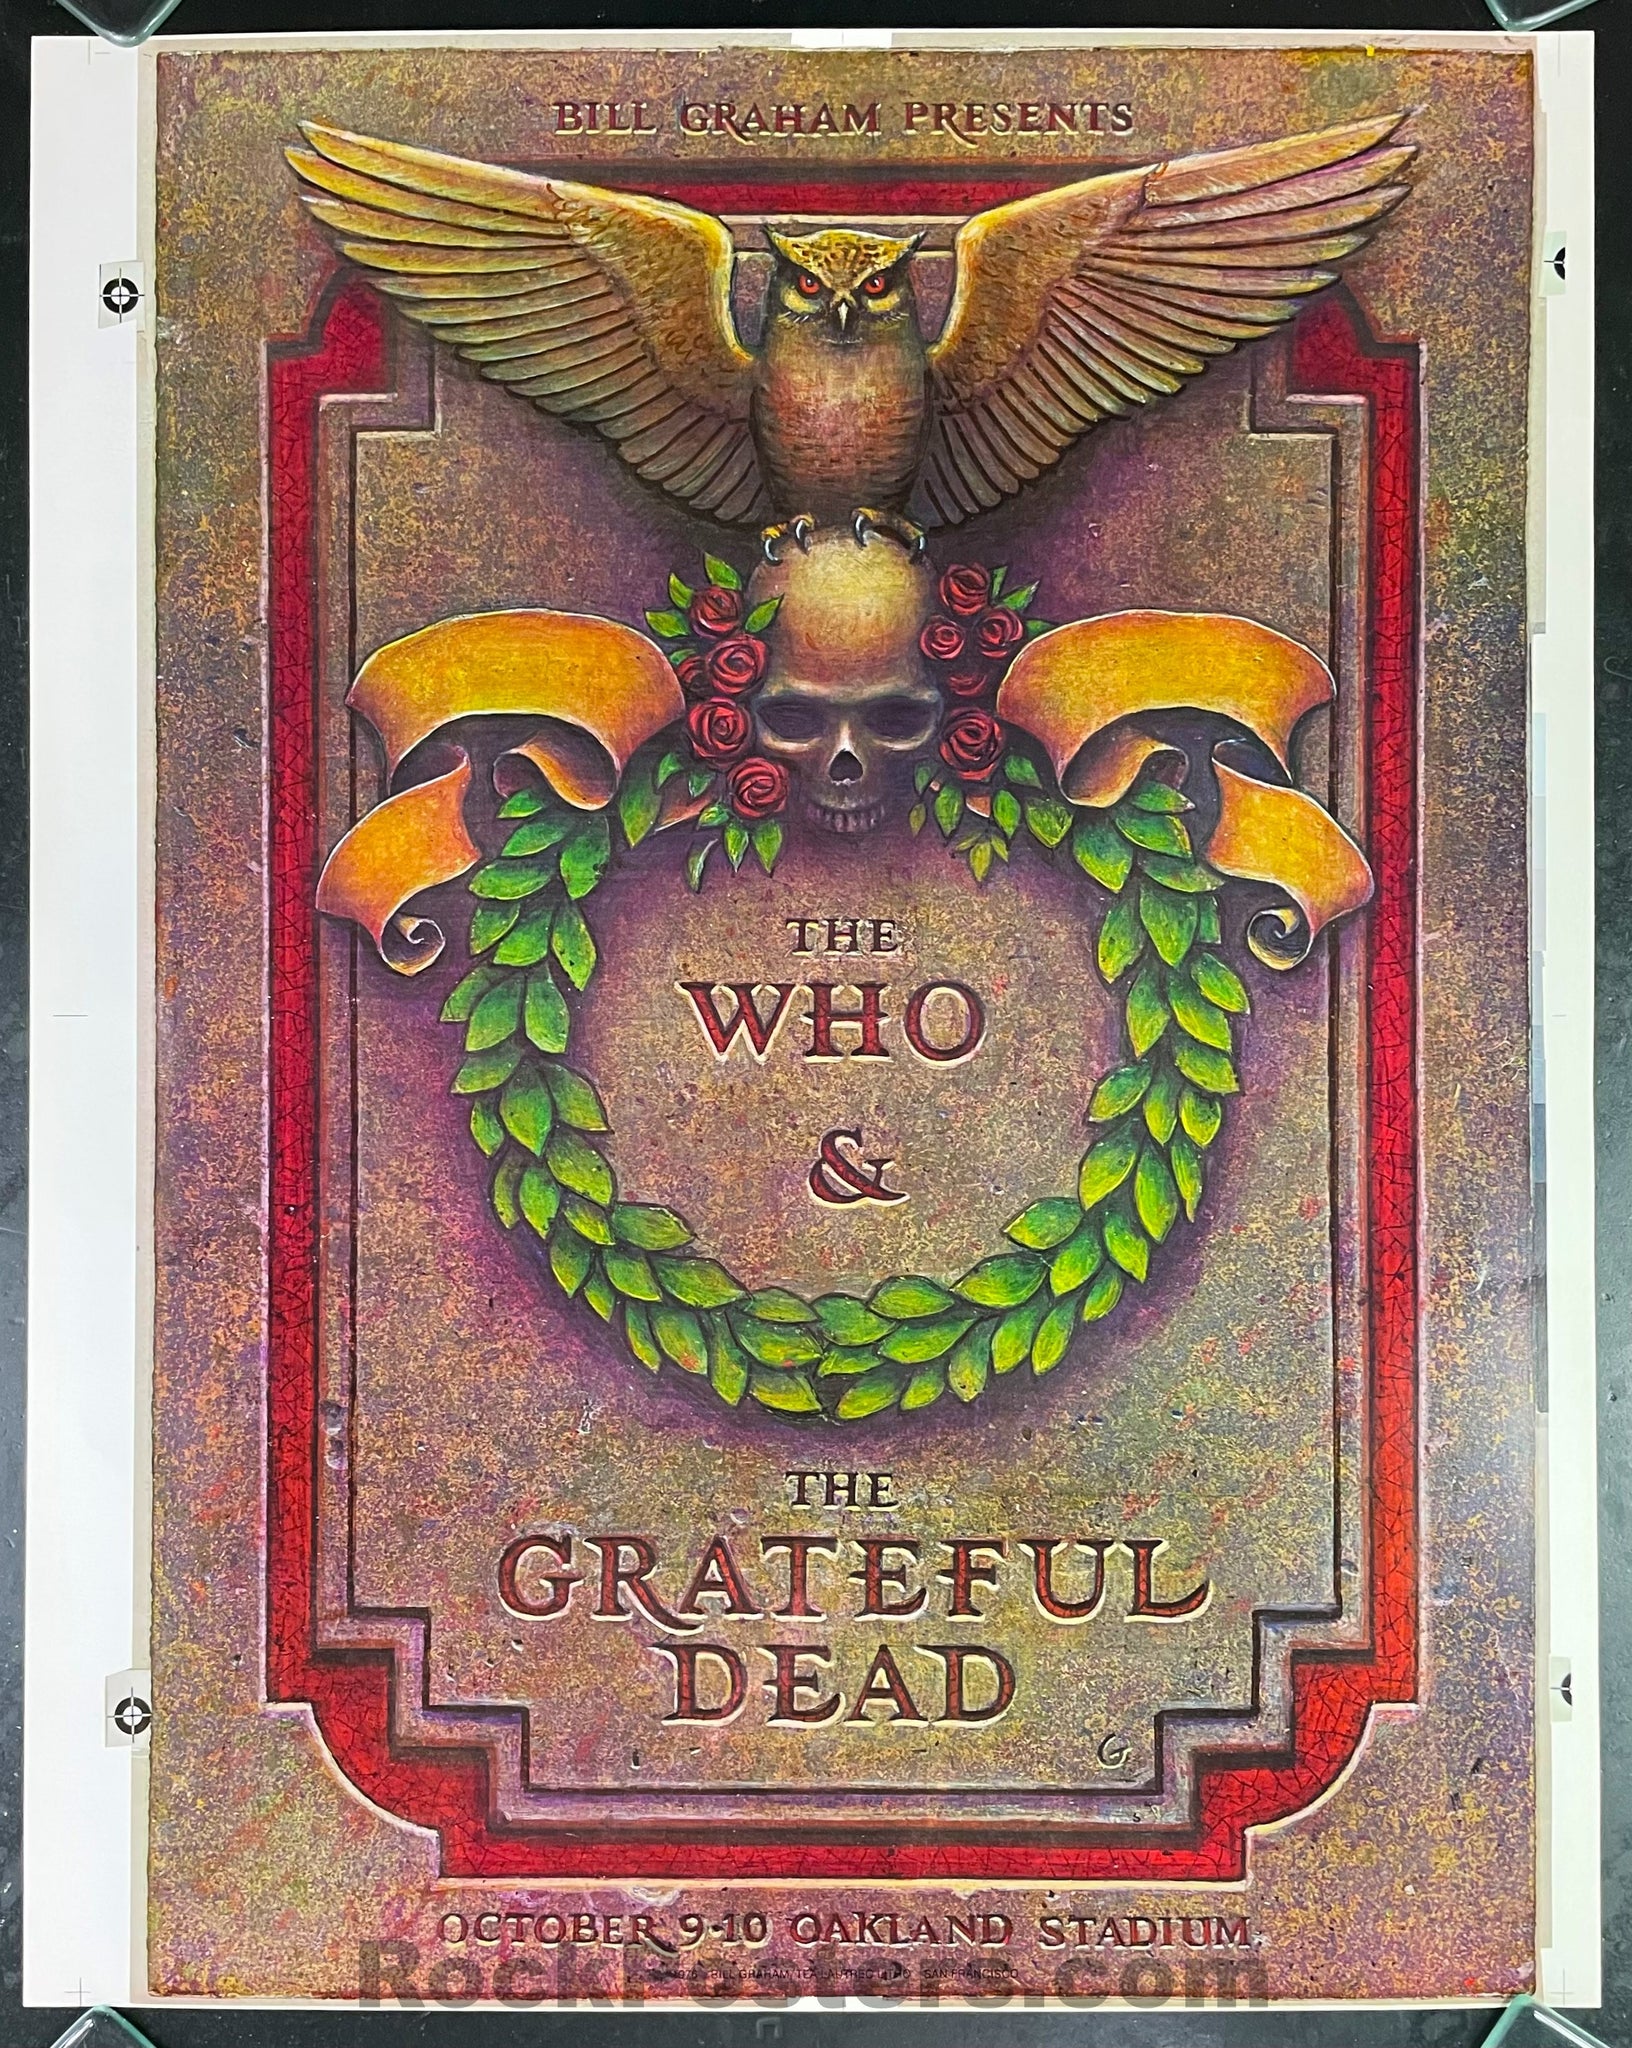 AUCTION - AOR  4.43 - Grateful Dead The Who - Uncut Proof - 1976 Poster - Near Mint Minus